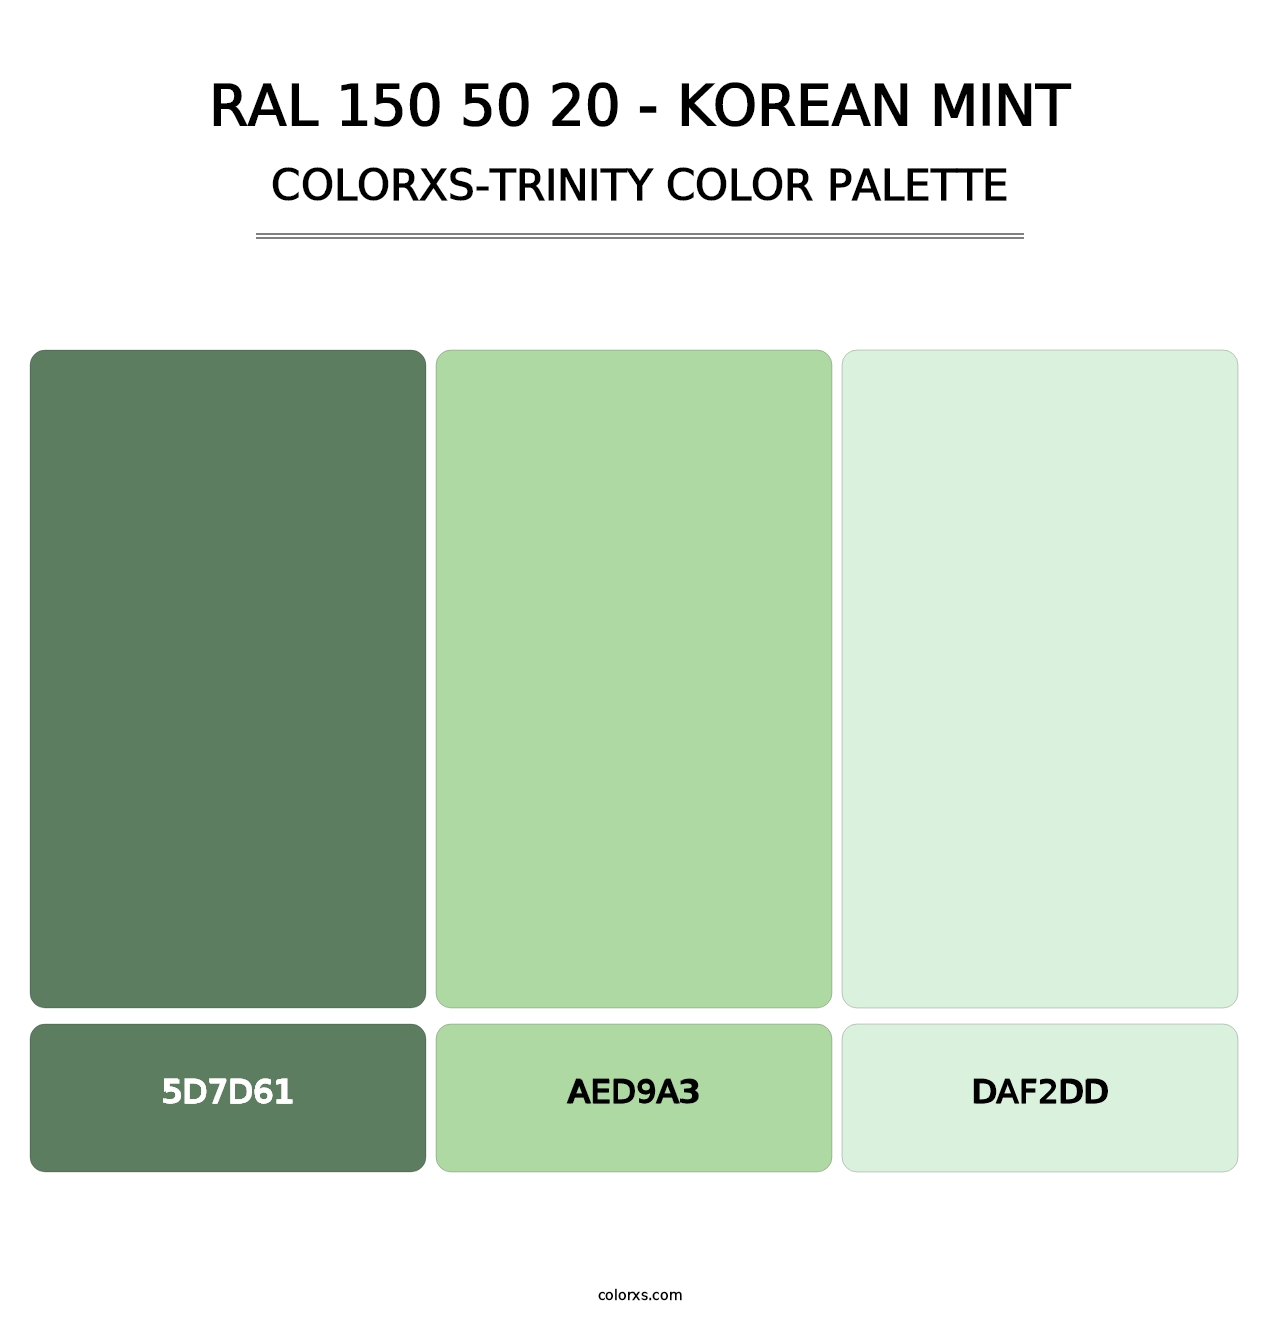 RAL 150 50 20 - Korean Mint - Colorxs Trinity Palette